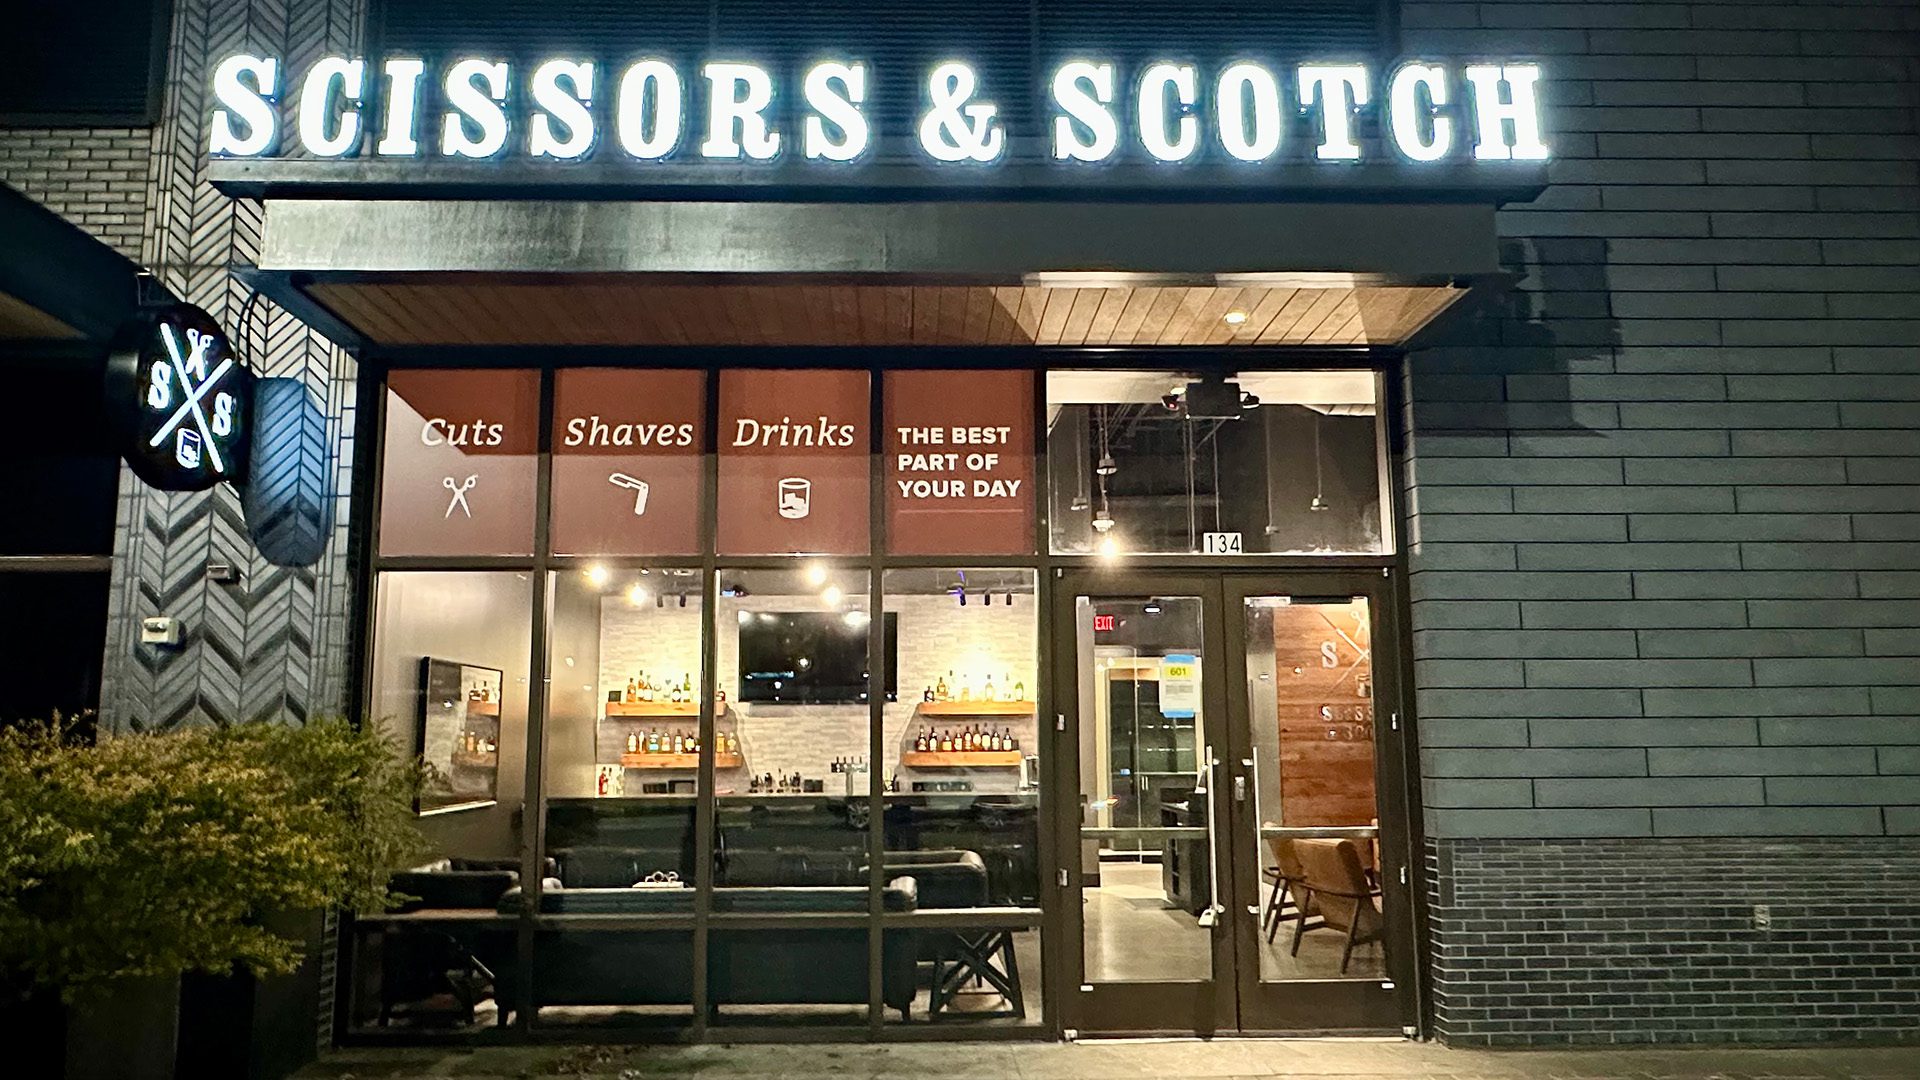 Scissors & Scotch storefront in Uptown Charlotte